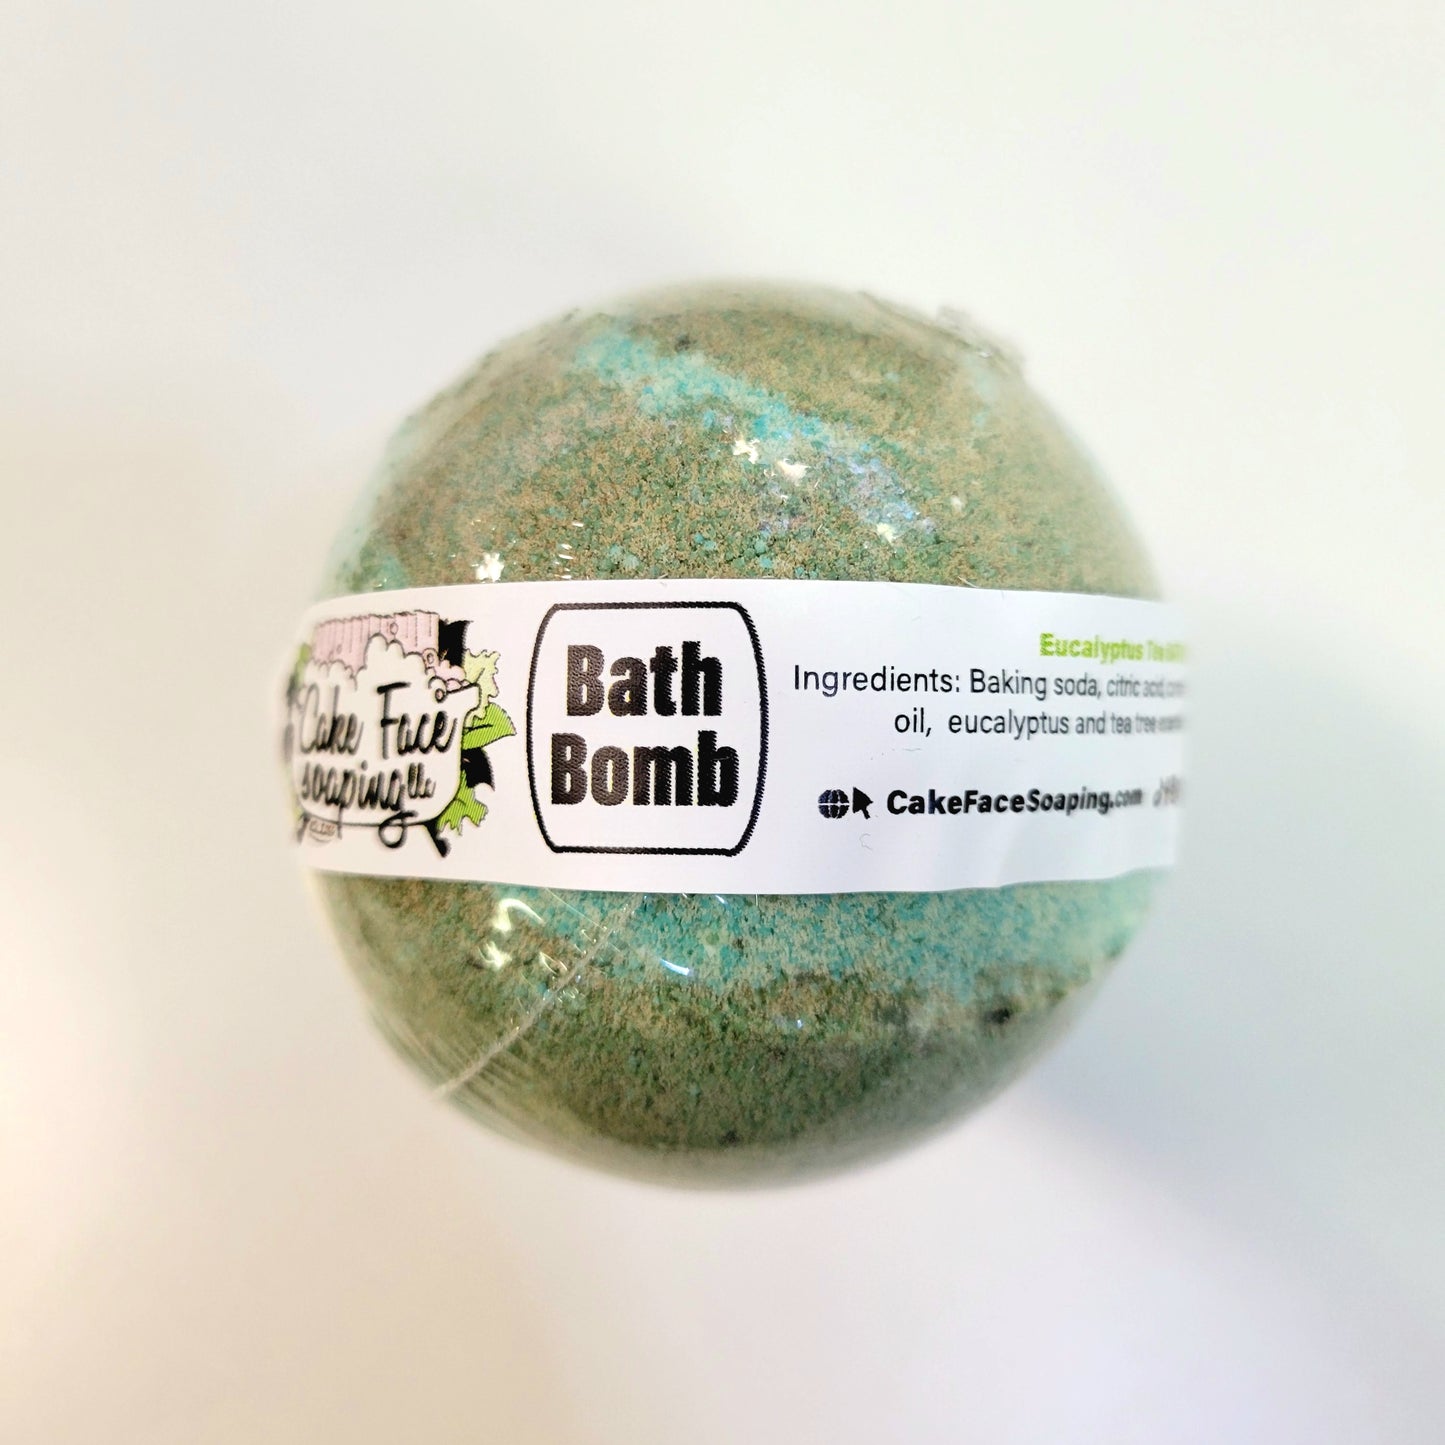 Bath Bomb - Eucalyptus Tea